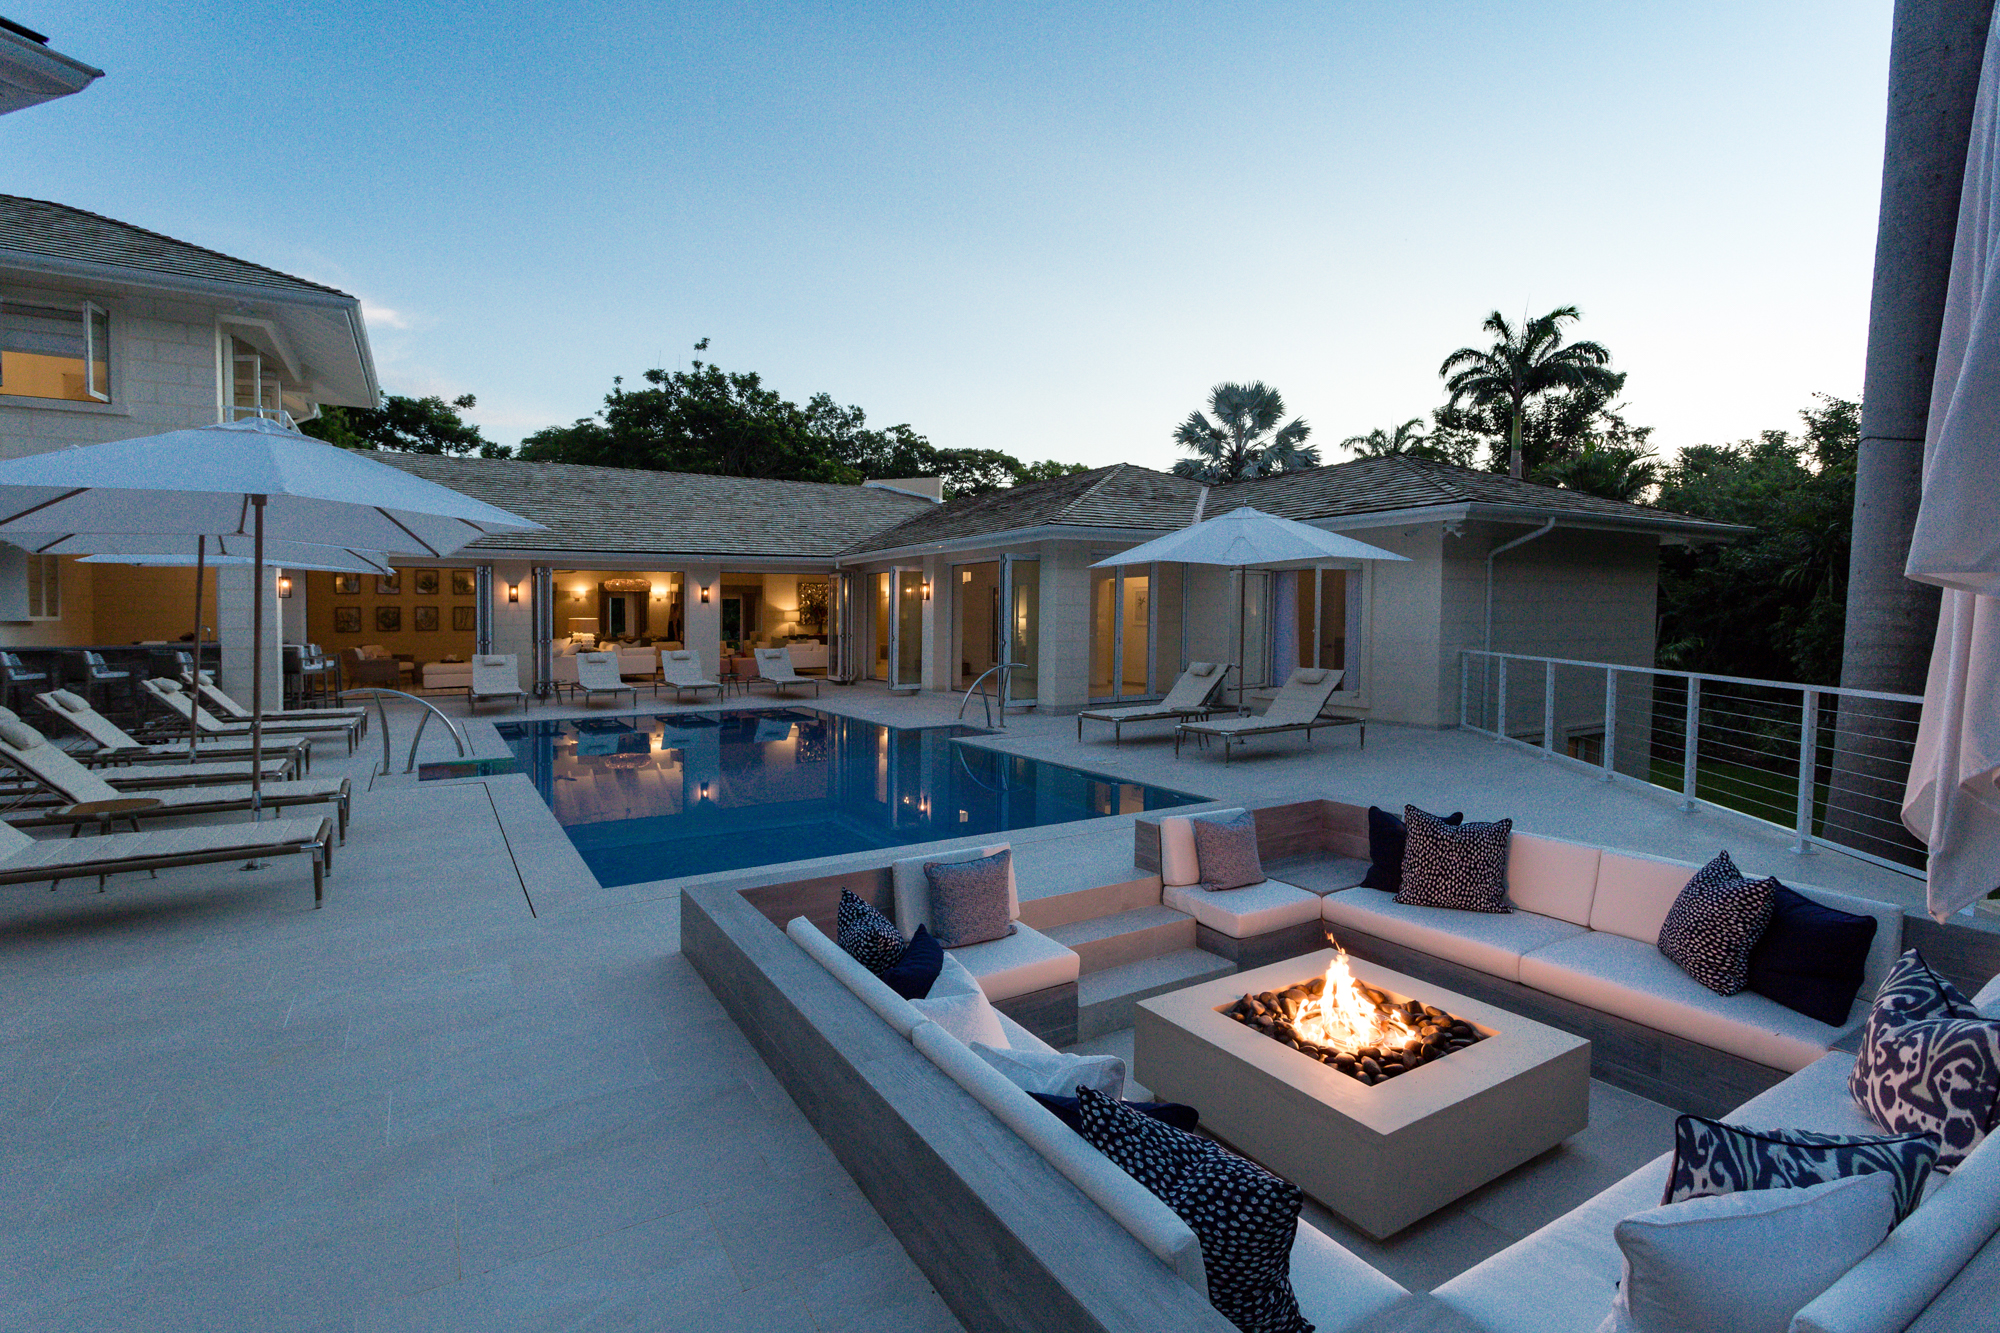 Sandy Lane Estate Barbados - Horizons - the pool and firepit at night